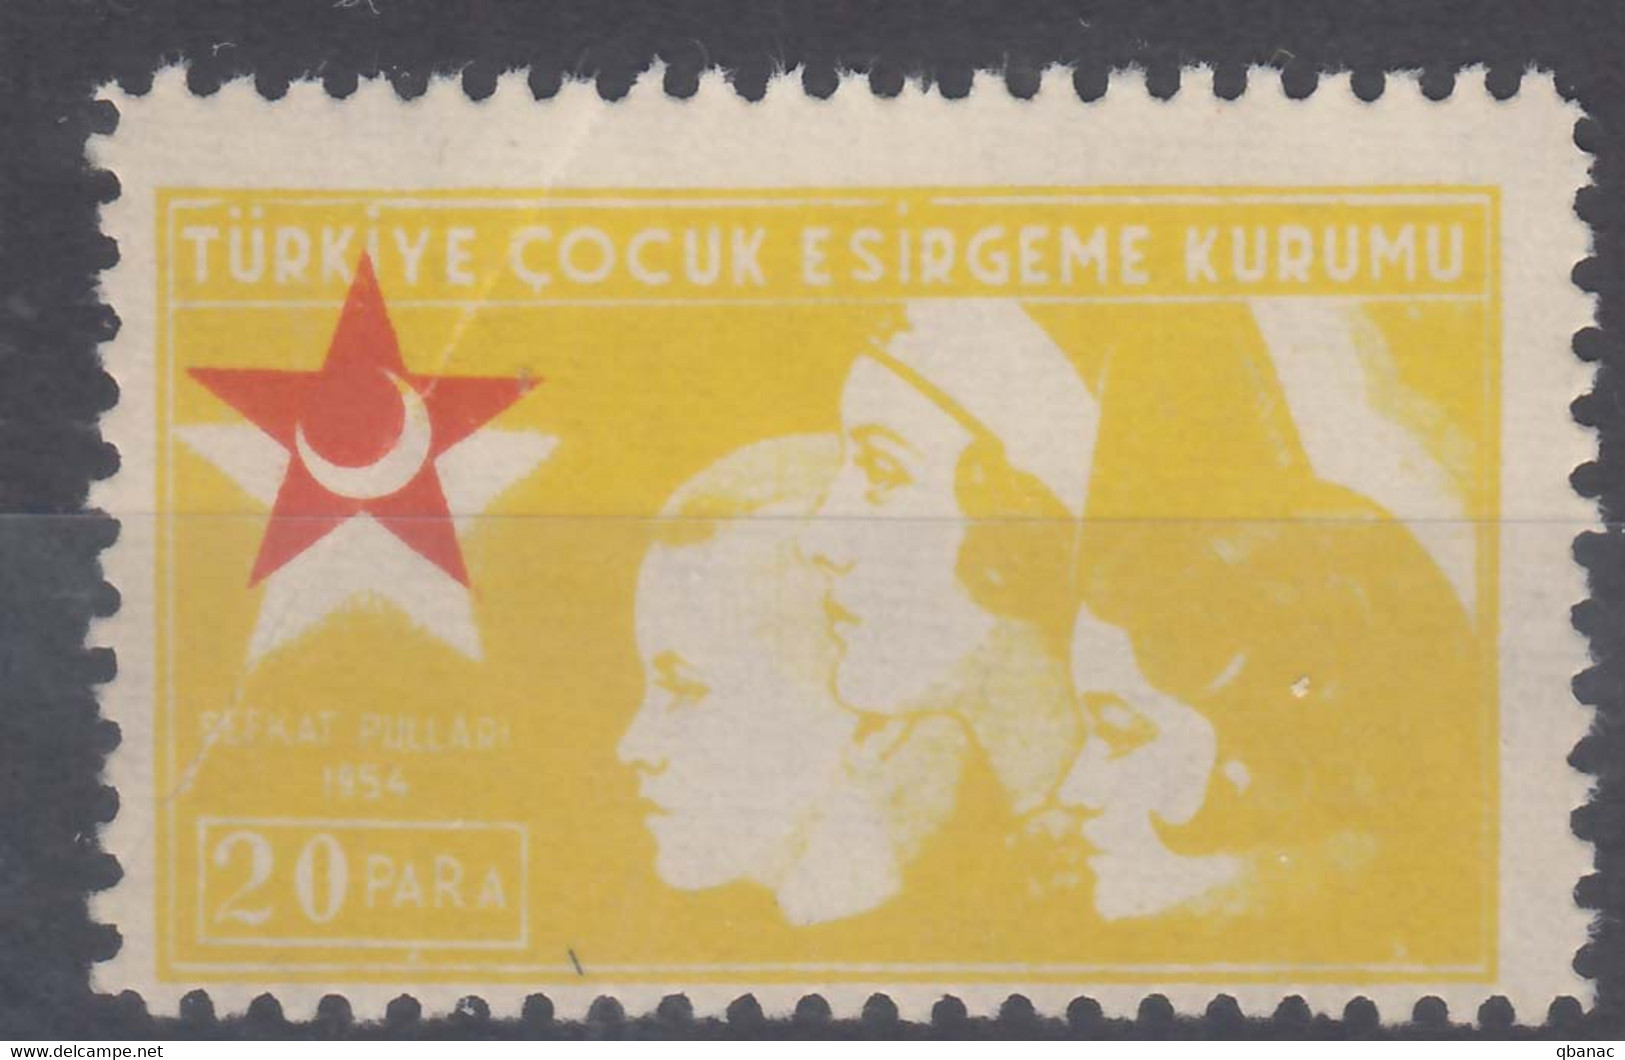 Turkey Back Of Book Charity Stamps 1954, Mint Hinged, Error - Moved Star - Wohlfahrtsmarken